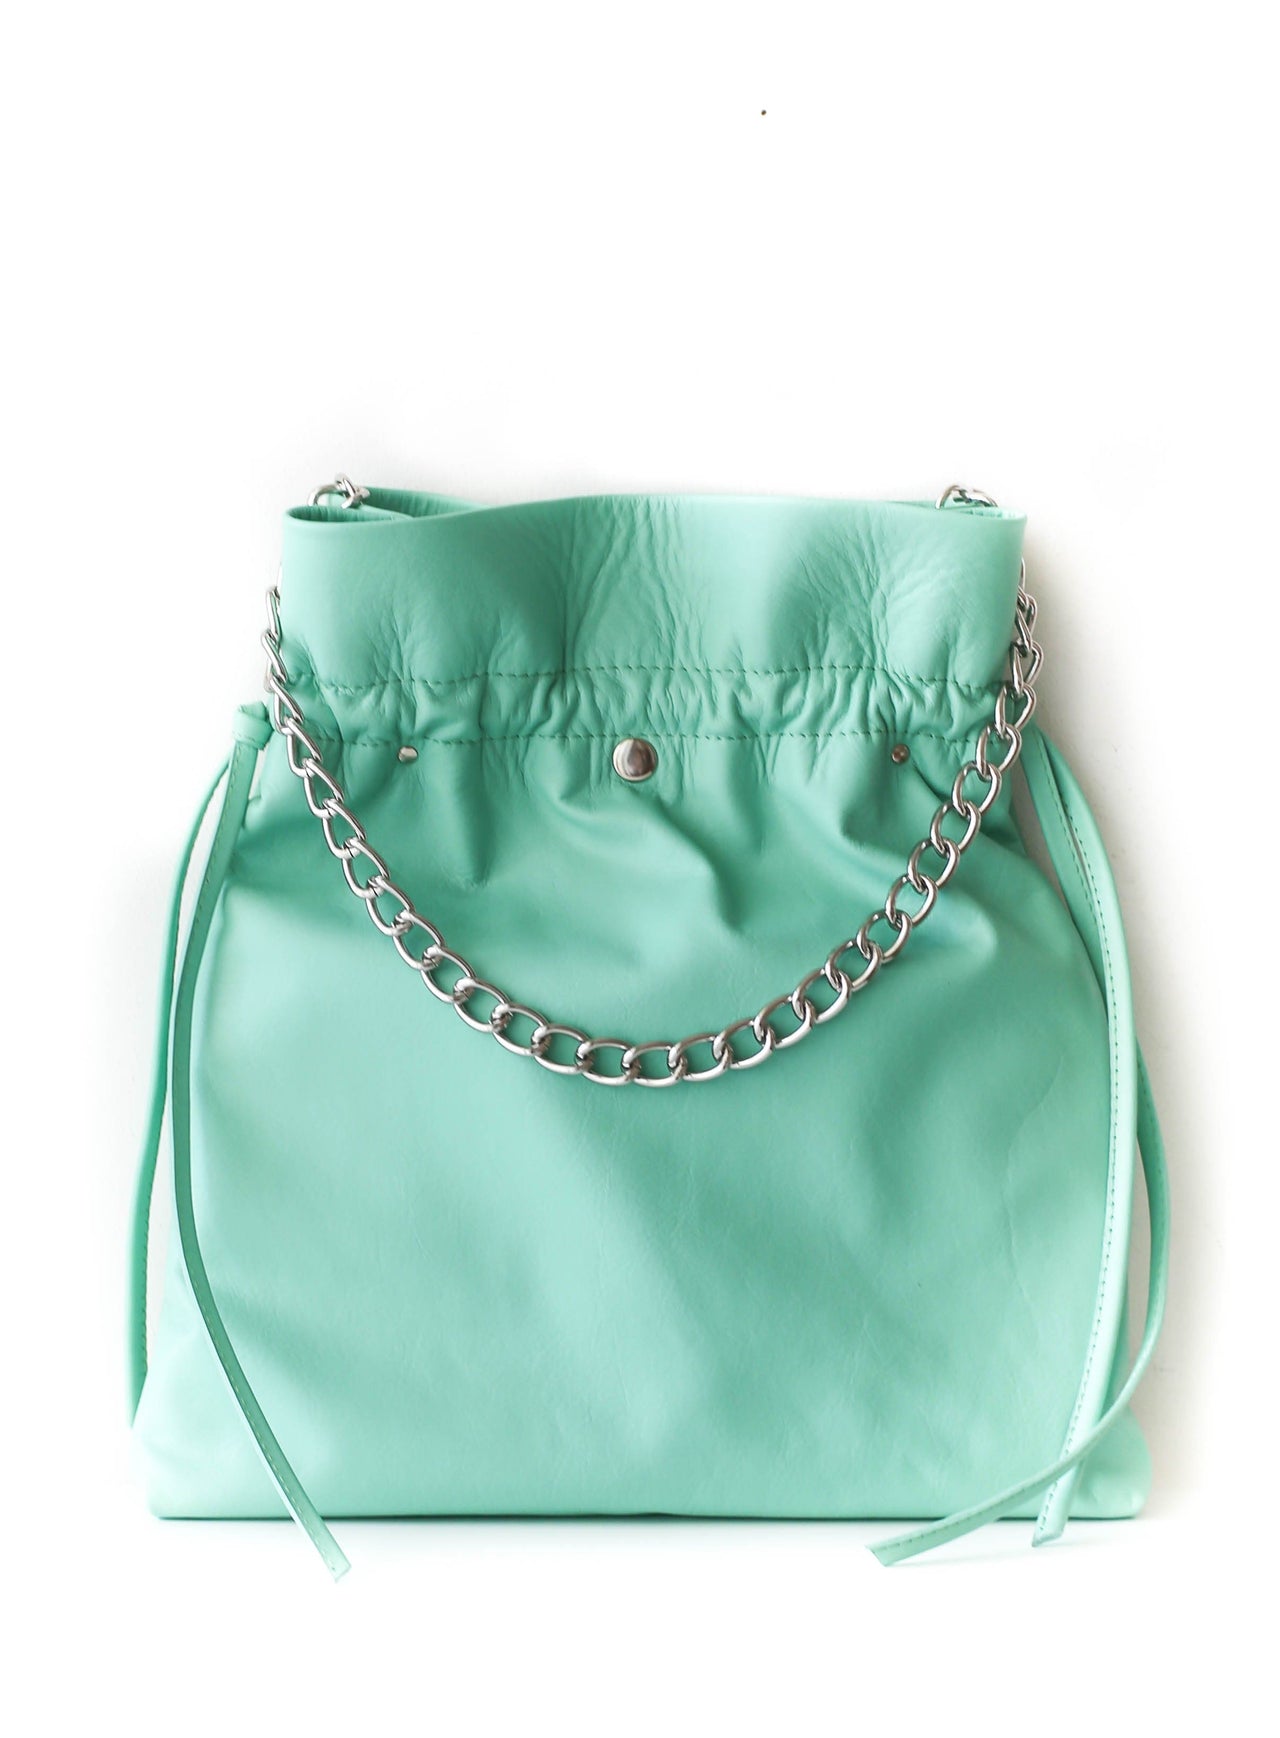 Turquoise Leather Drawstring Handbag Teal Leather Cinch Bag 